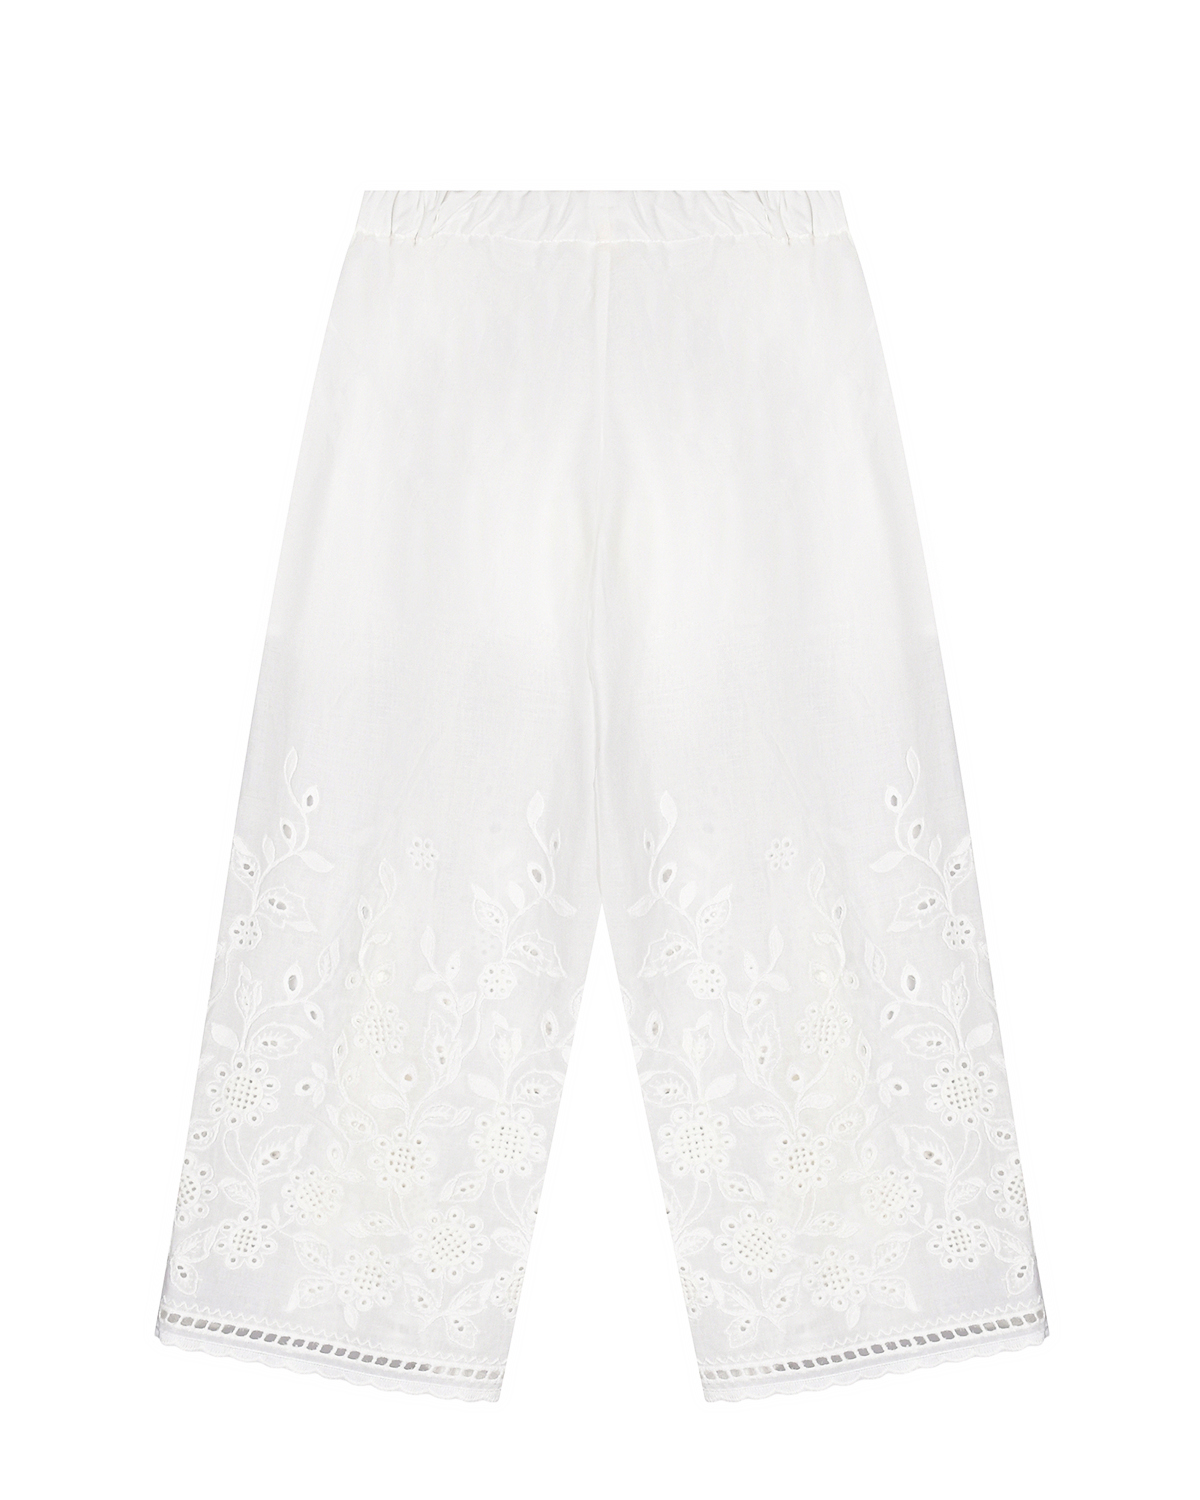 Белые брюки с вышивкой Miss Grant, размер 164, цвет белый